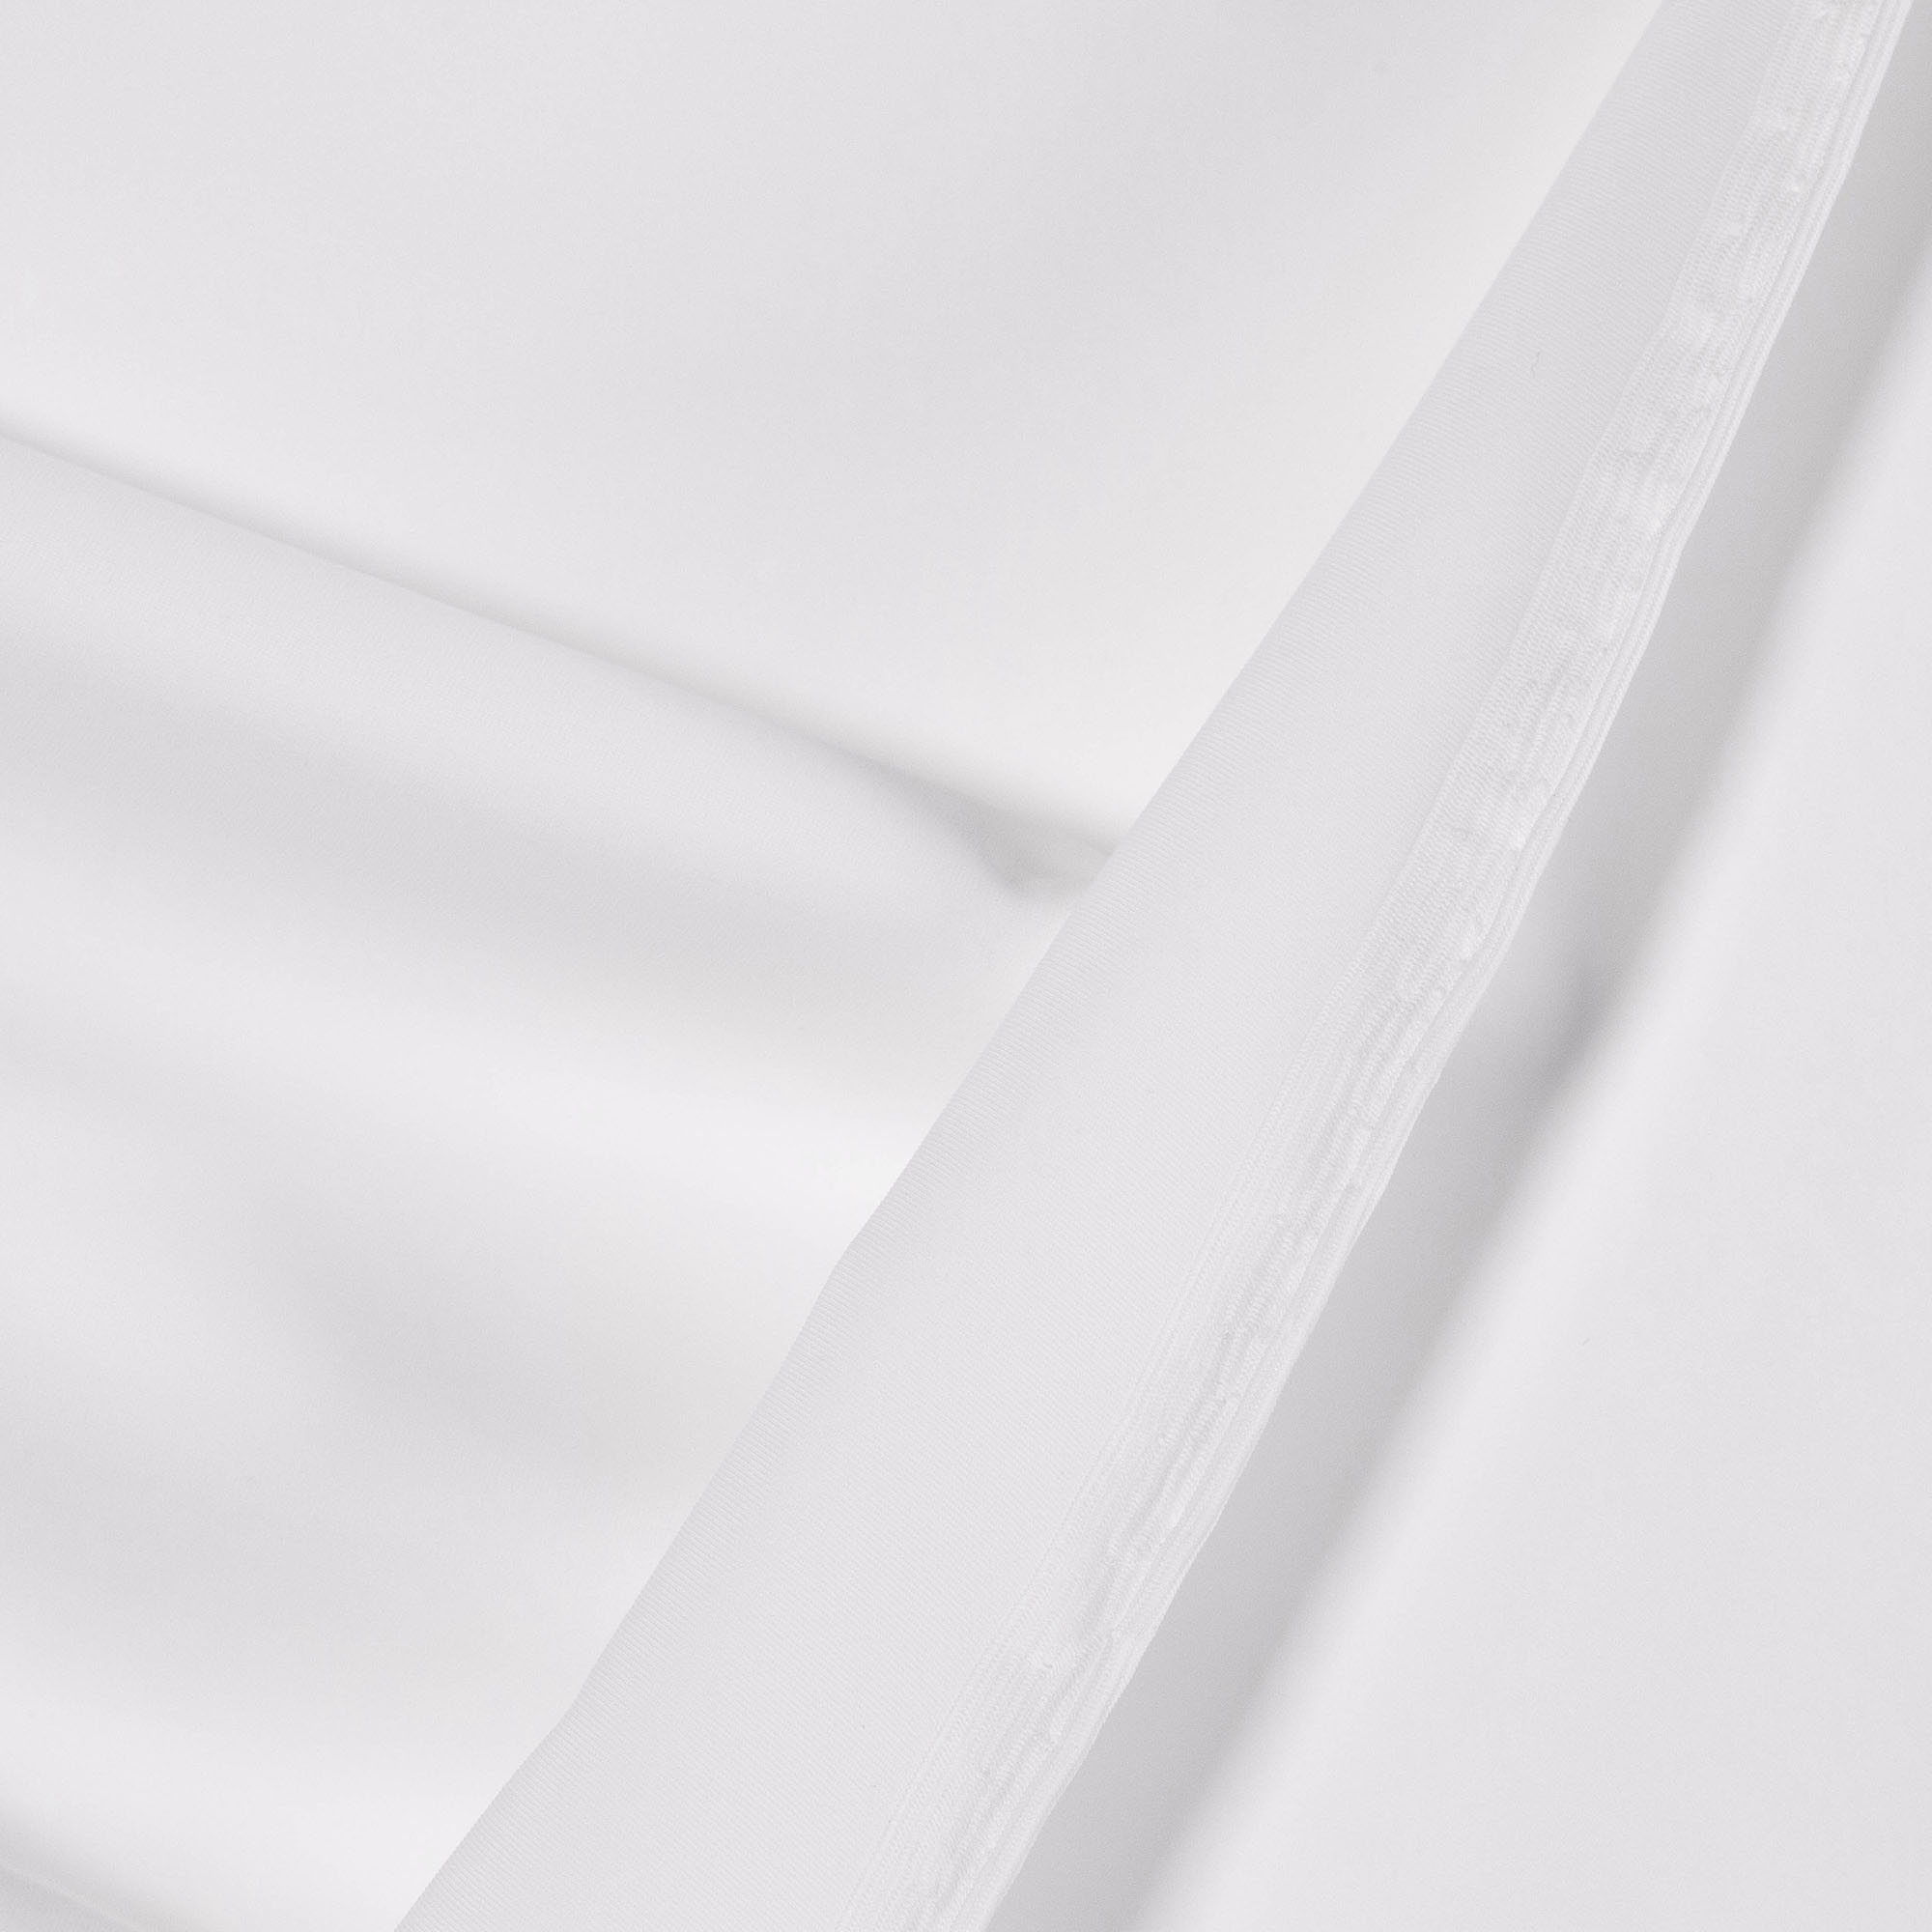 Wholesale Swimwear Fabric White | SOFI Enterprises Inc.